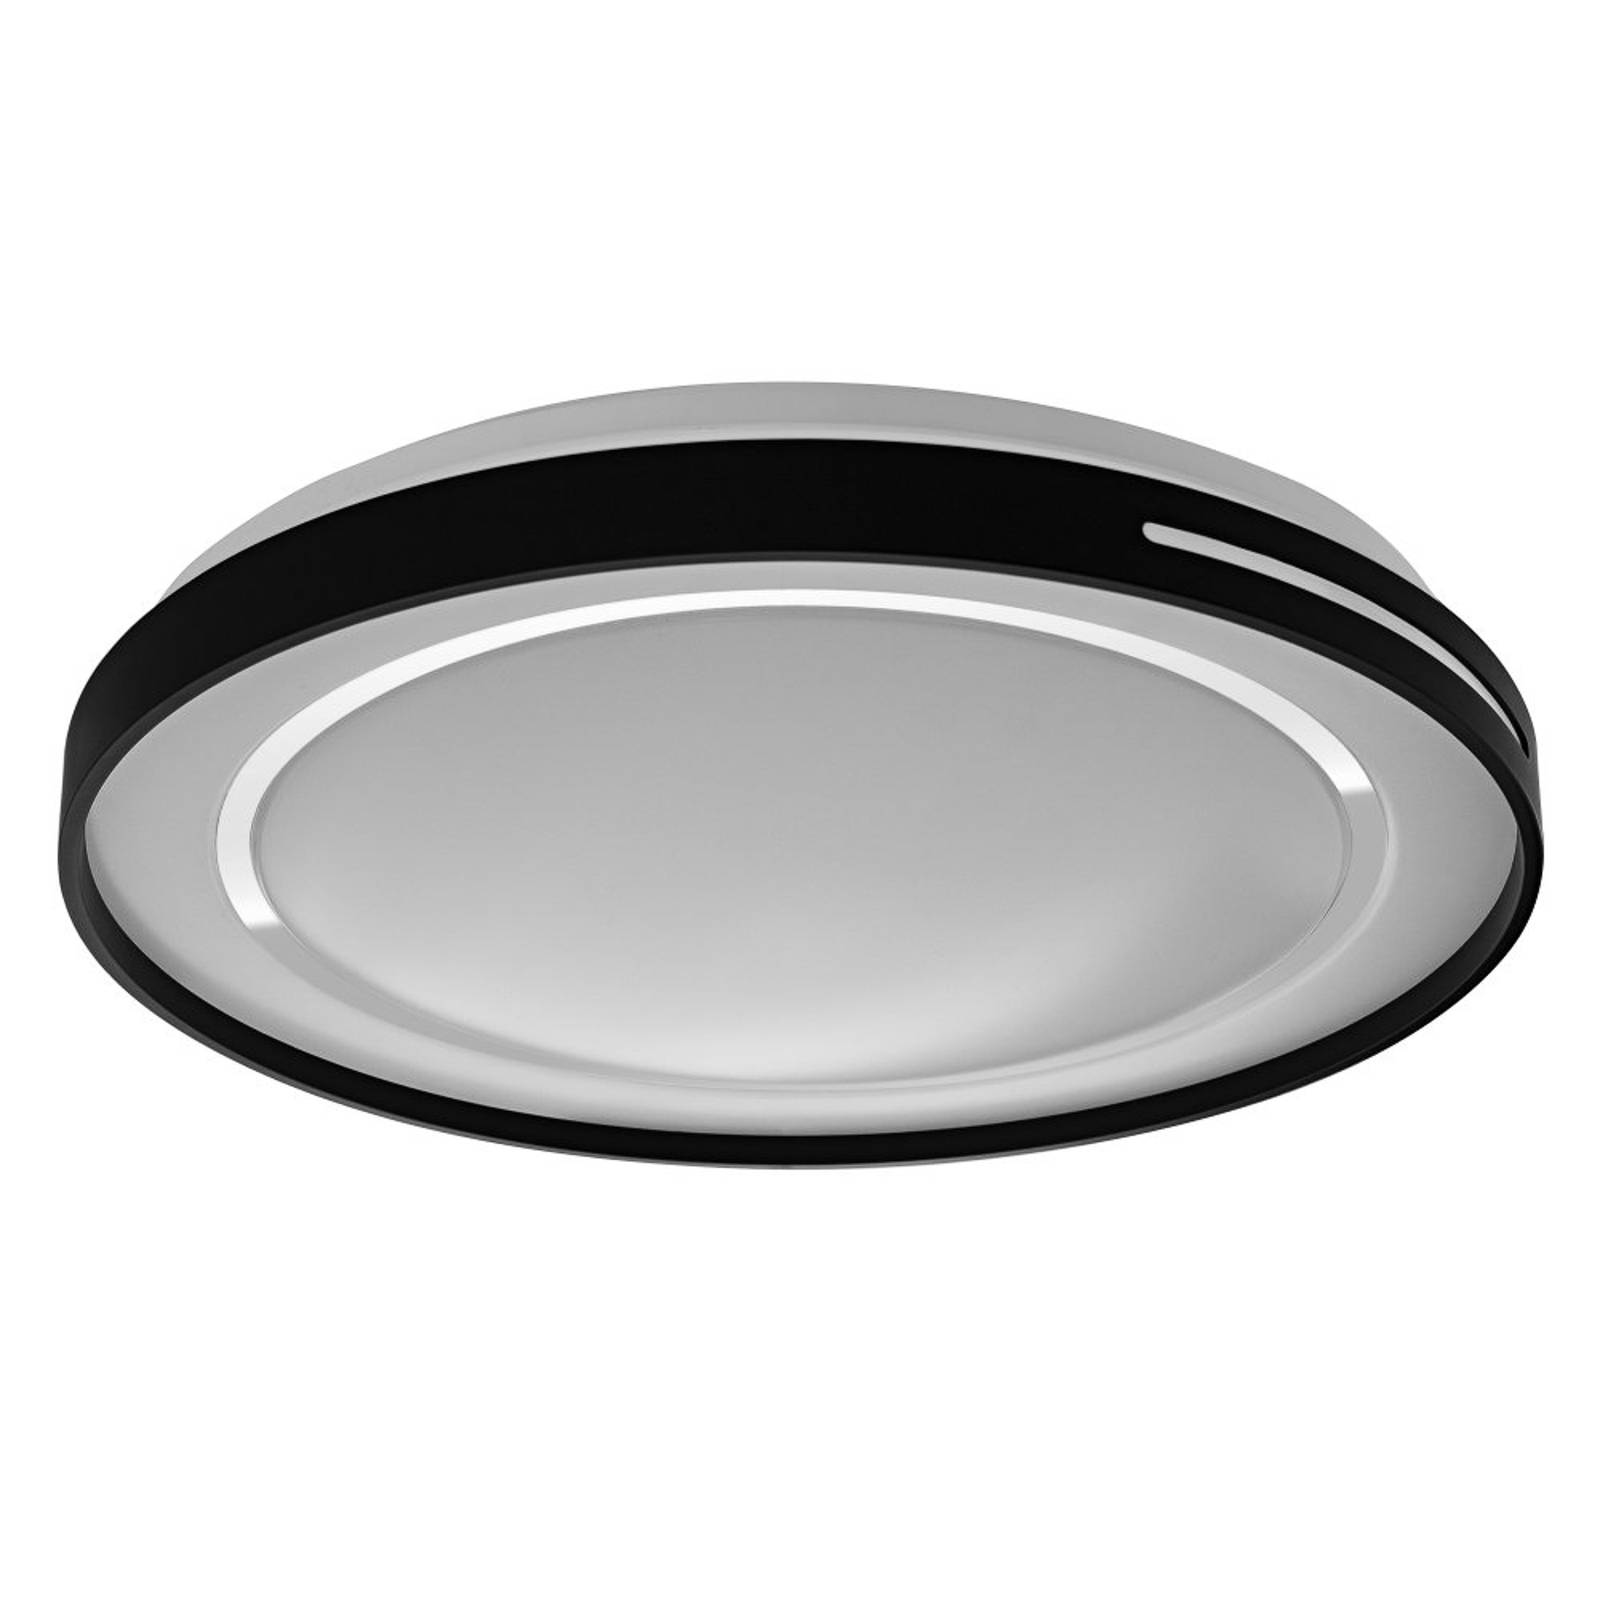 LEDVANCE SMART+ WiFi Orbis Lisa LED-Deckenlampe günstig online kaufen